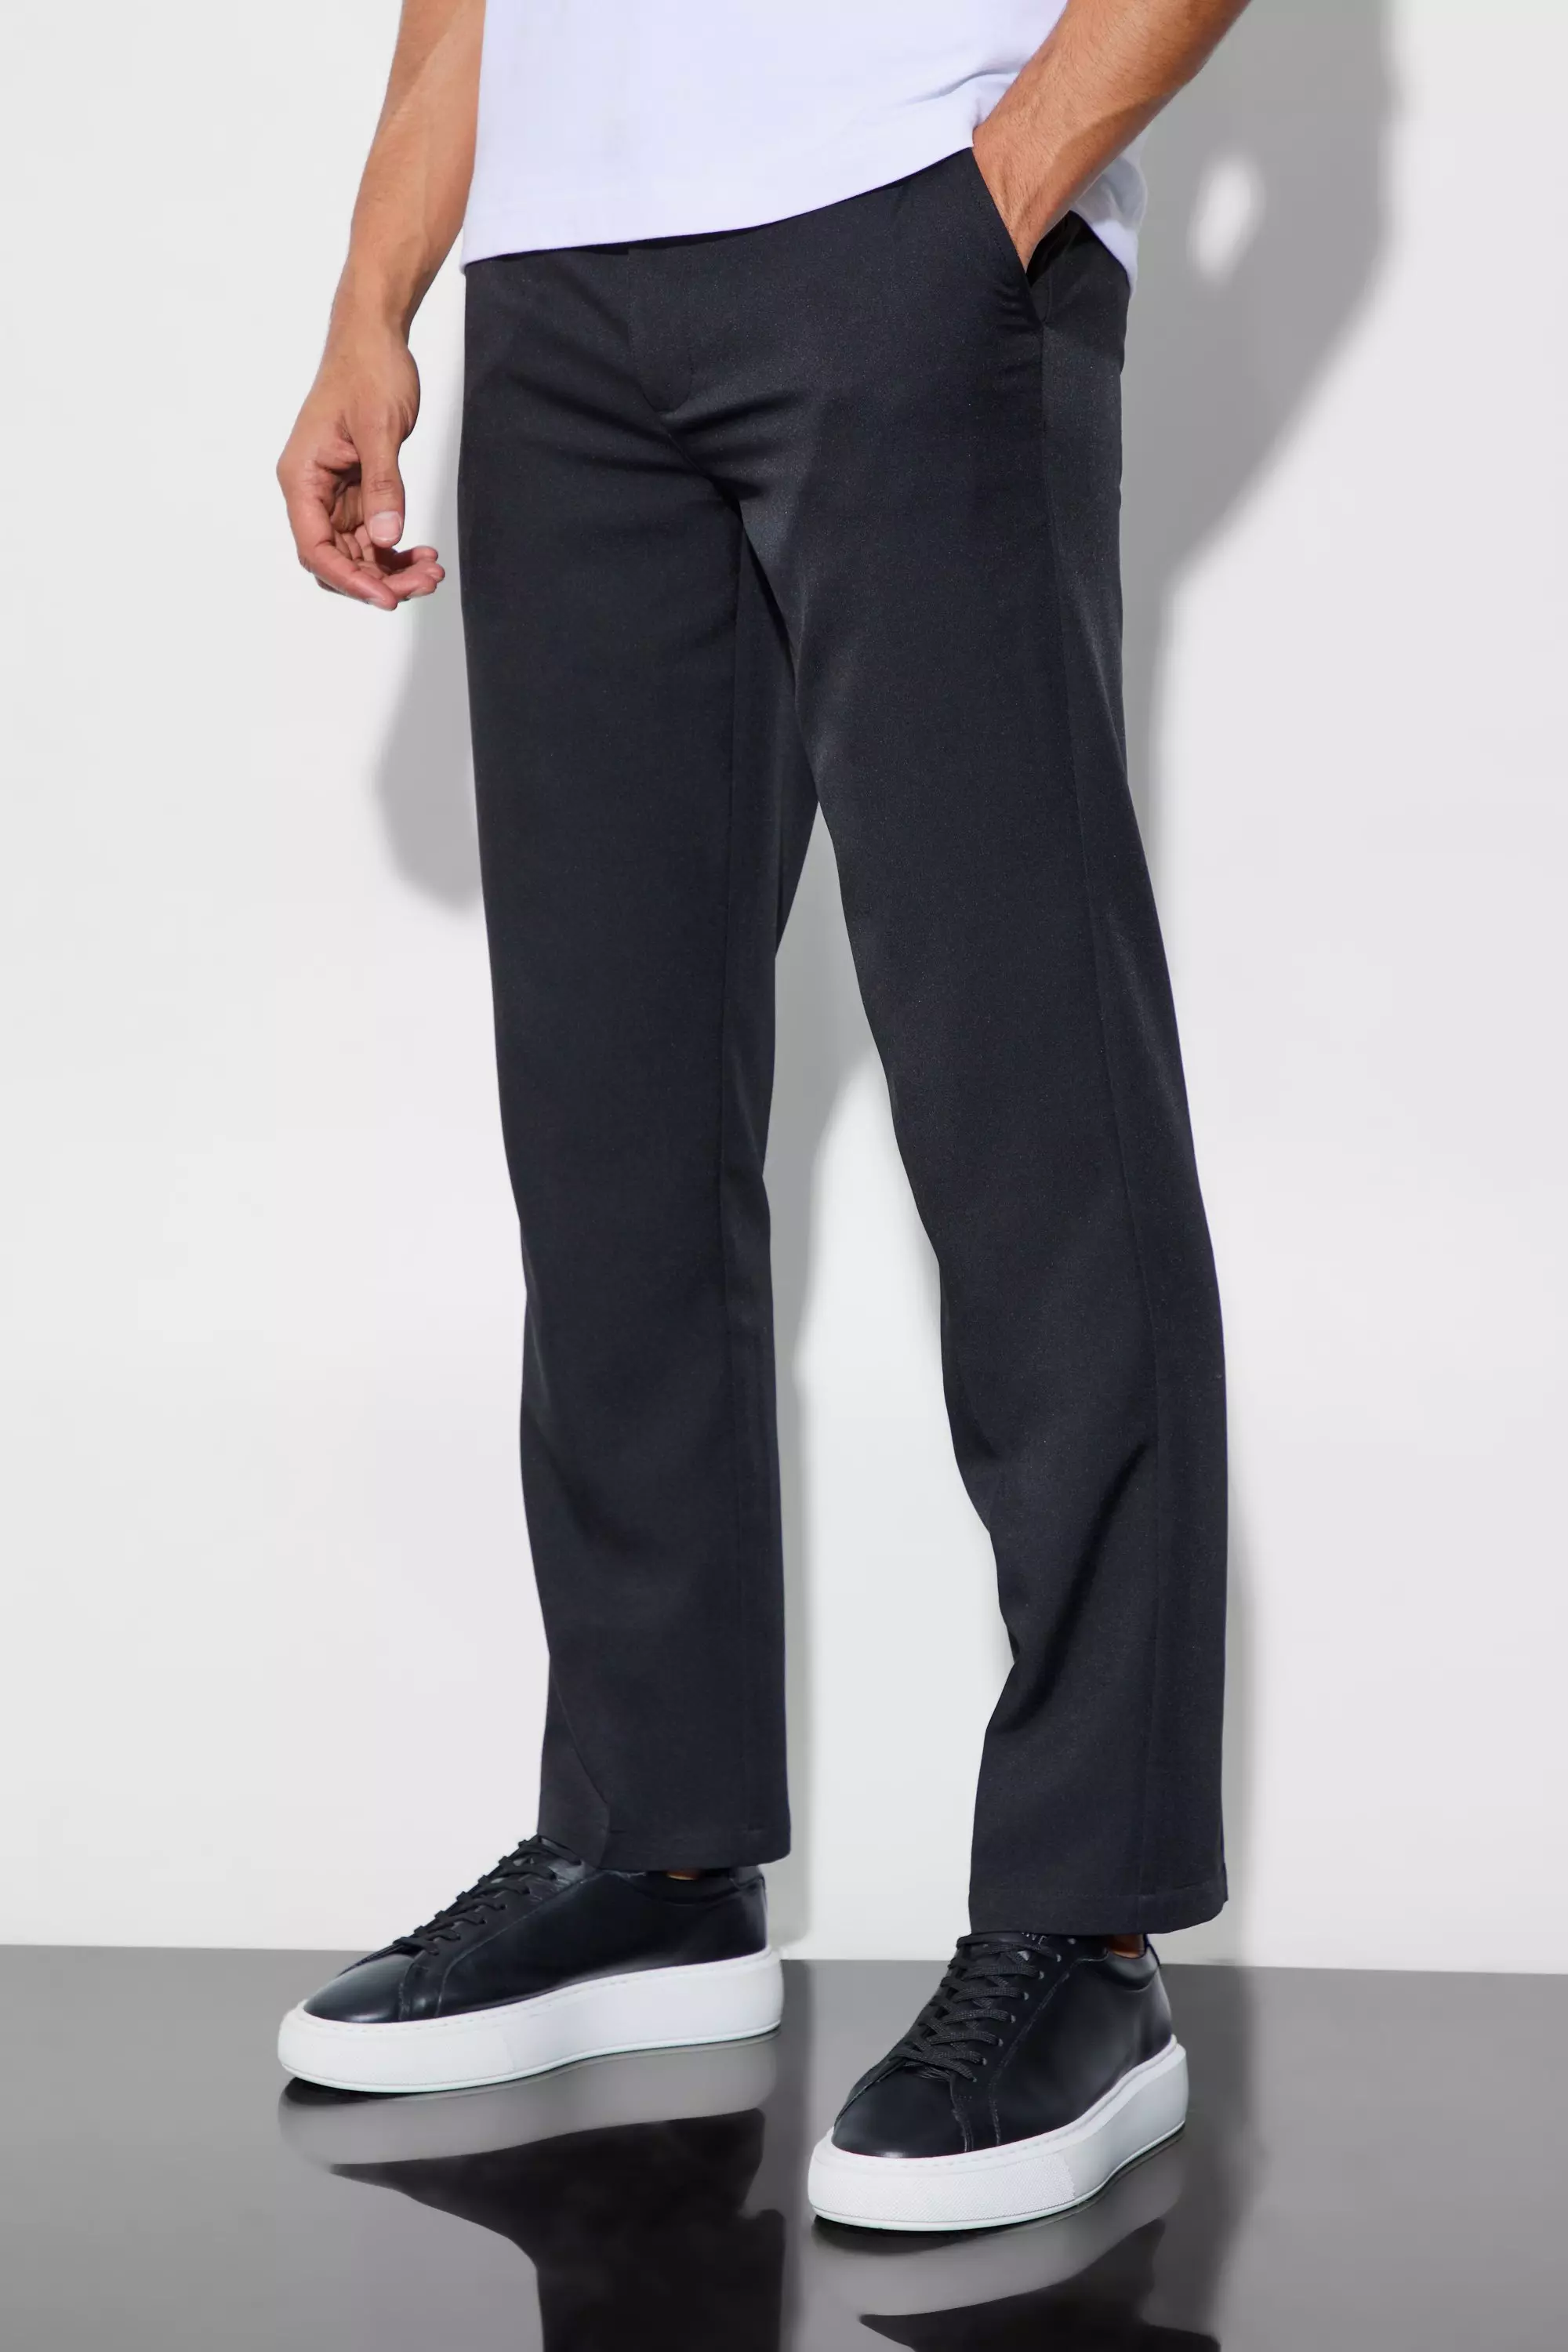 Men's Black Tailored Pants